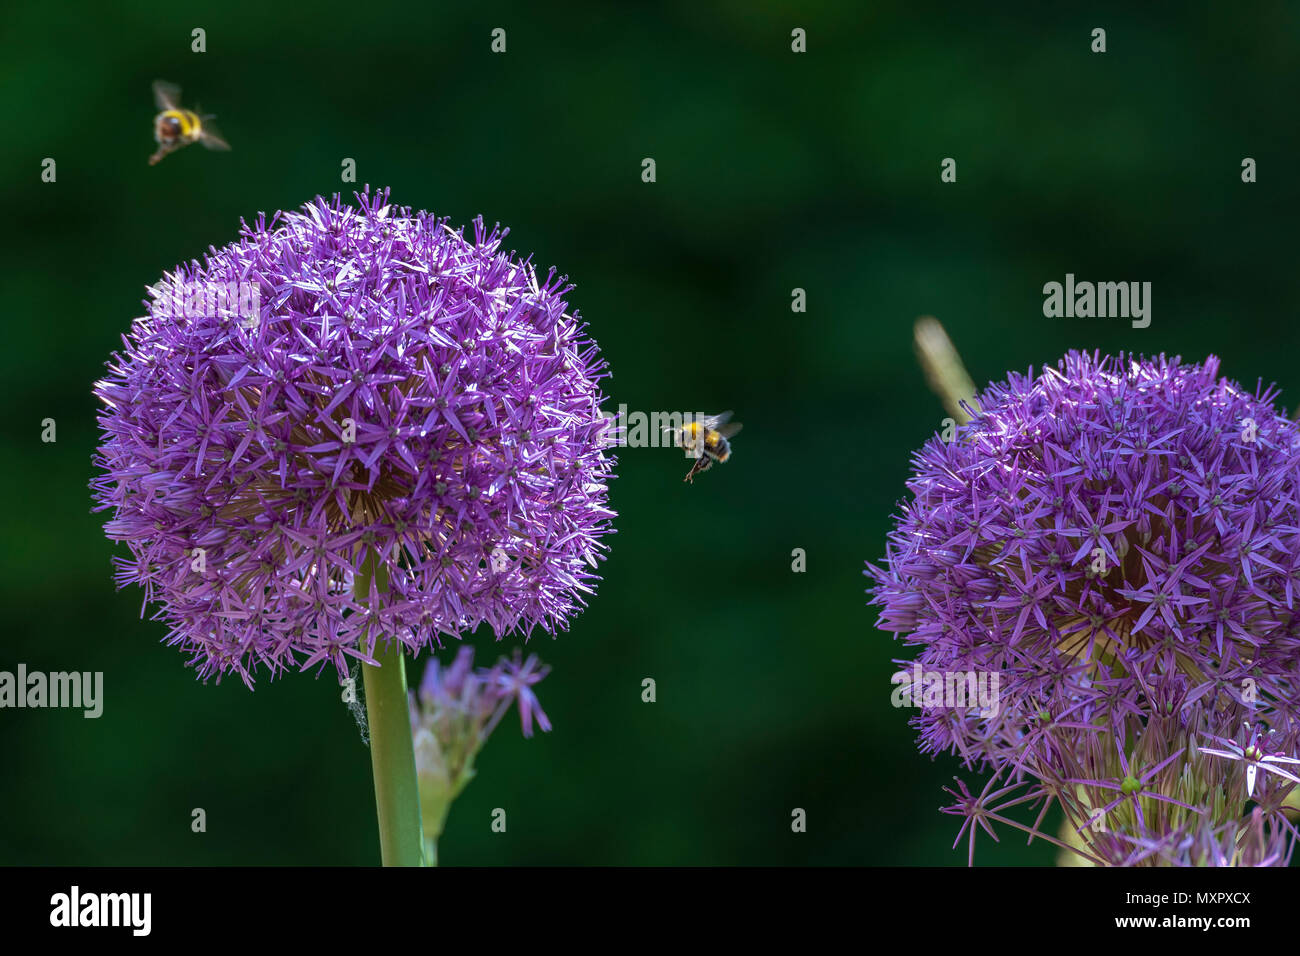 Bees at an Alium flower head Stock Photo